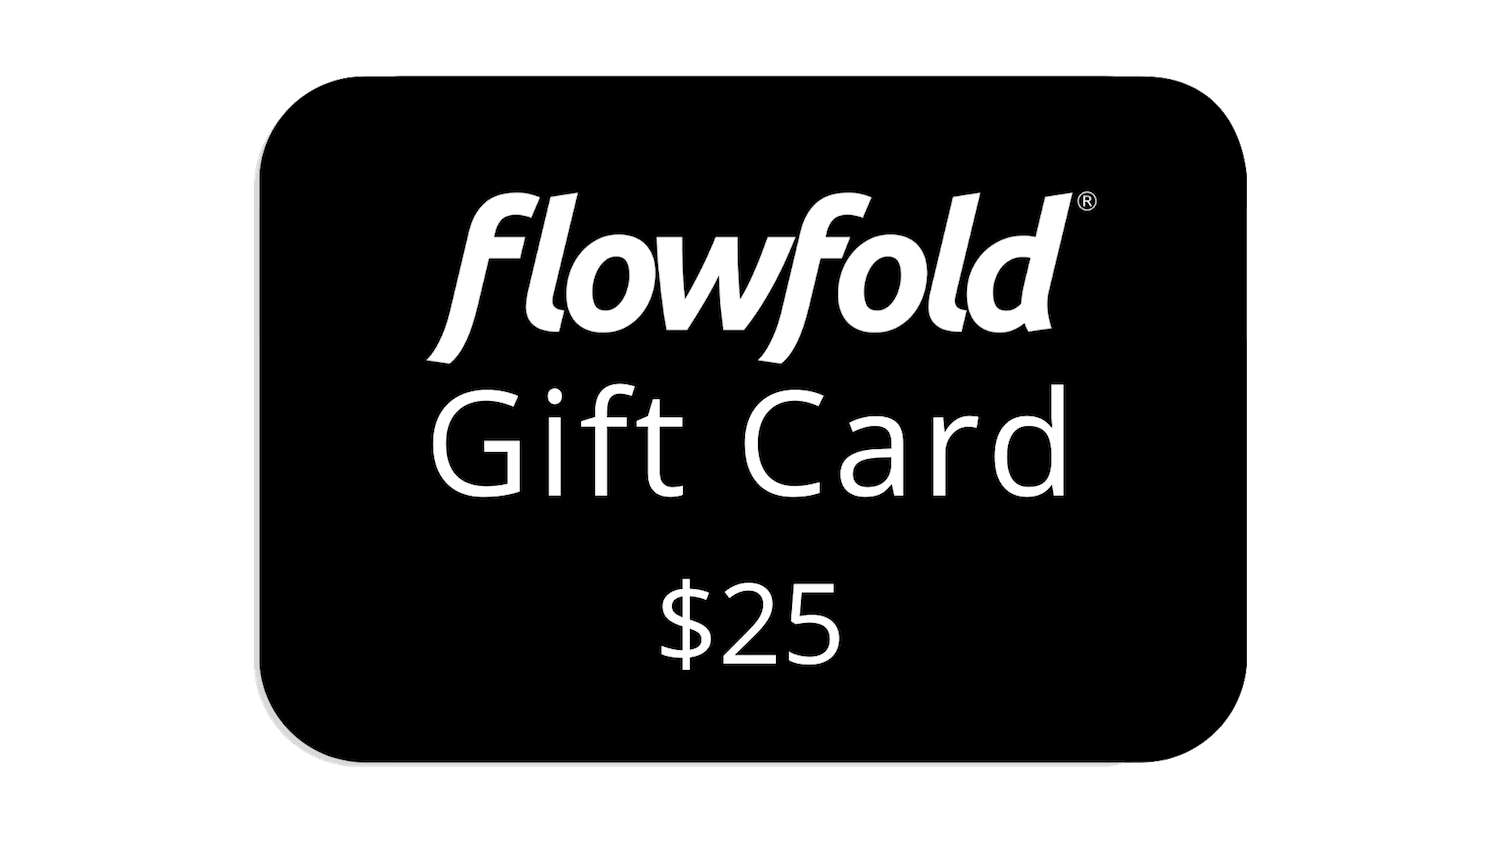 Flowfold Gift Card - $25